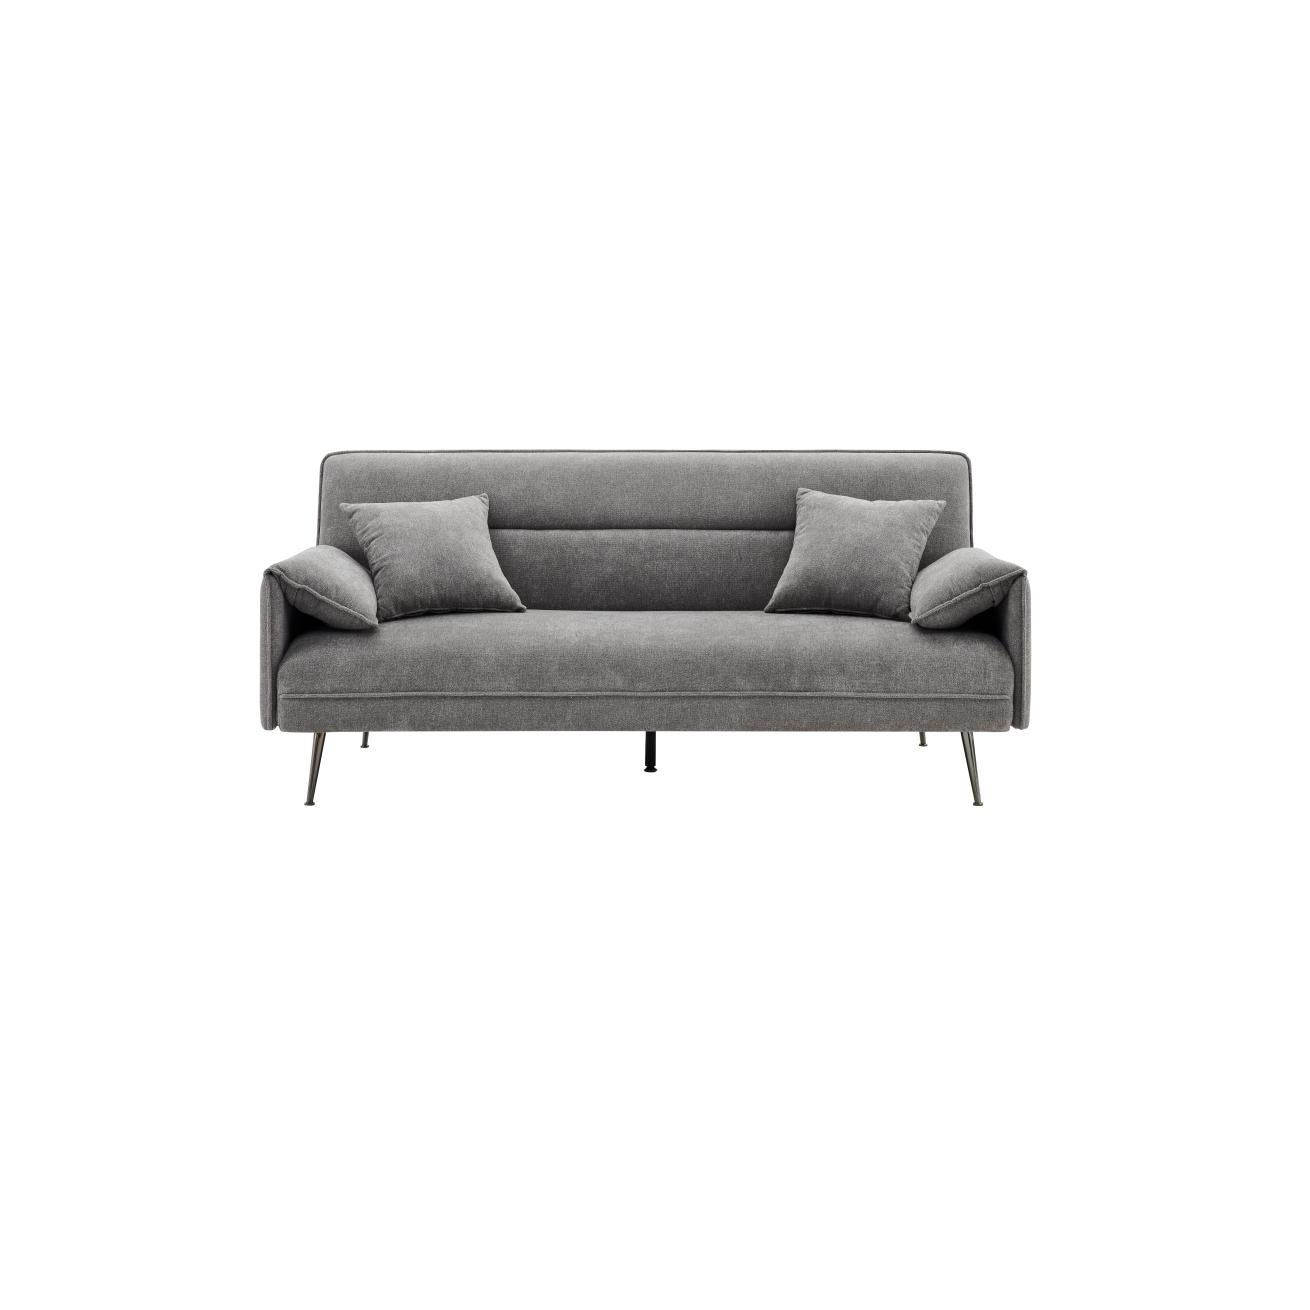 Sofa "Lana", dunkelgrau - Dunkelgrau/Grau, MODERN, Holz/Textil (199/89/95cm) - Bessagi Home